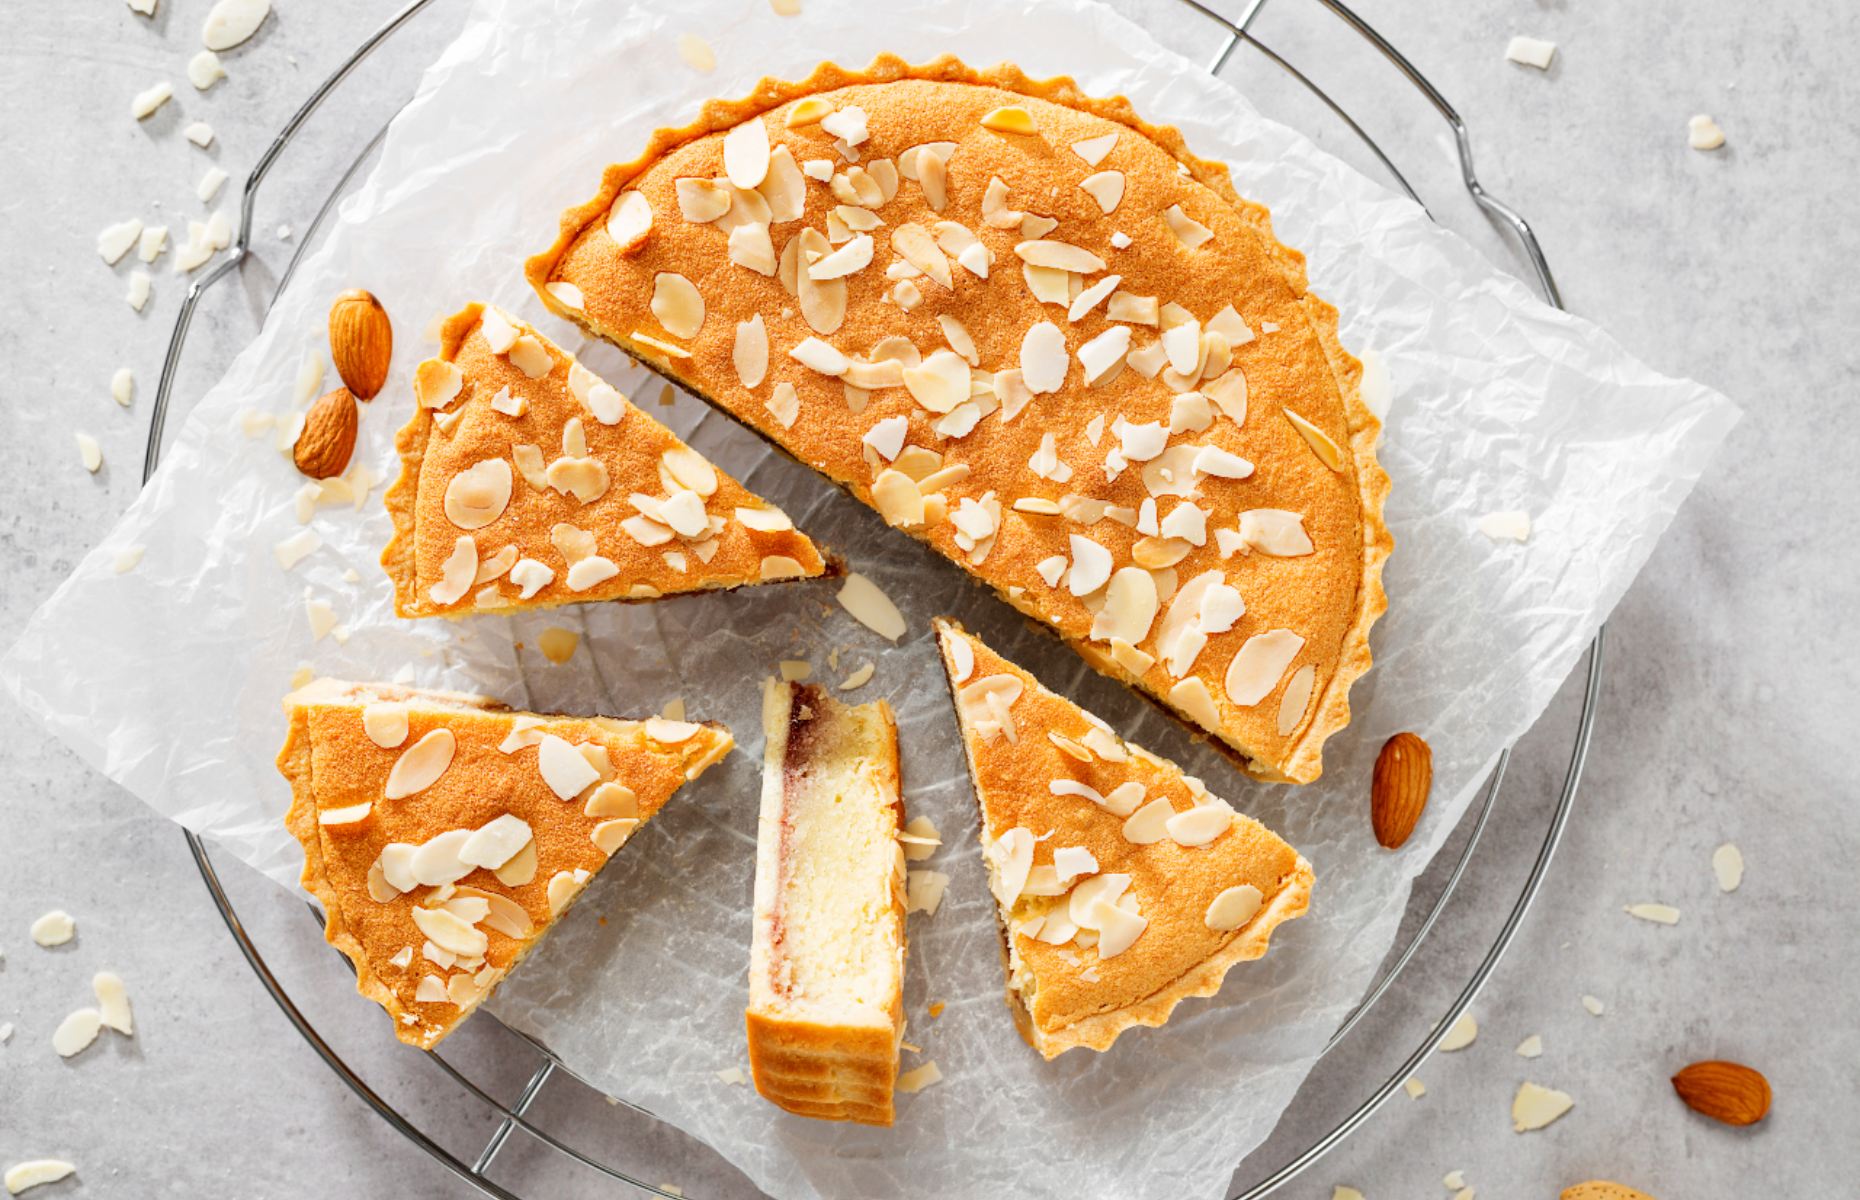 Freshly baked Bakewell tart (Image: Nelea33/Shutterstock)